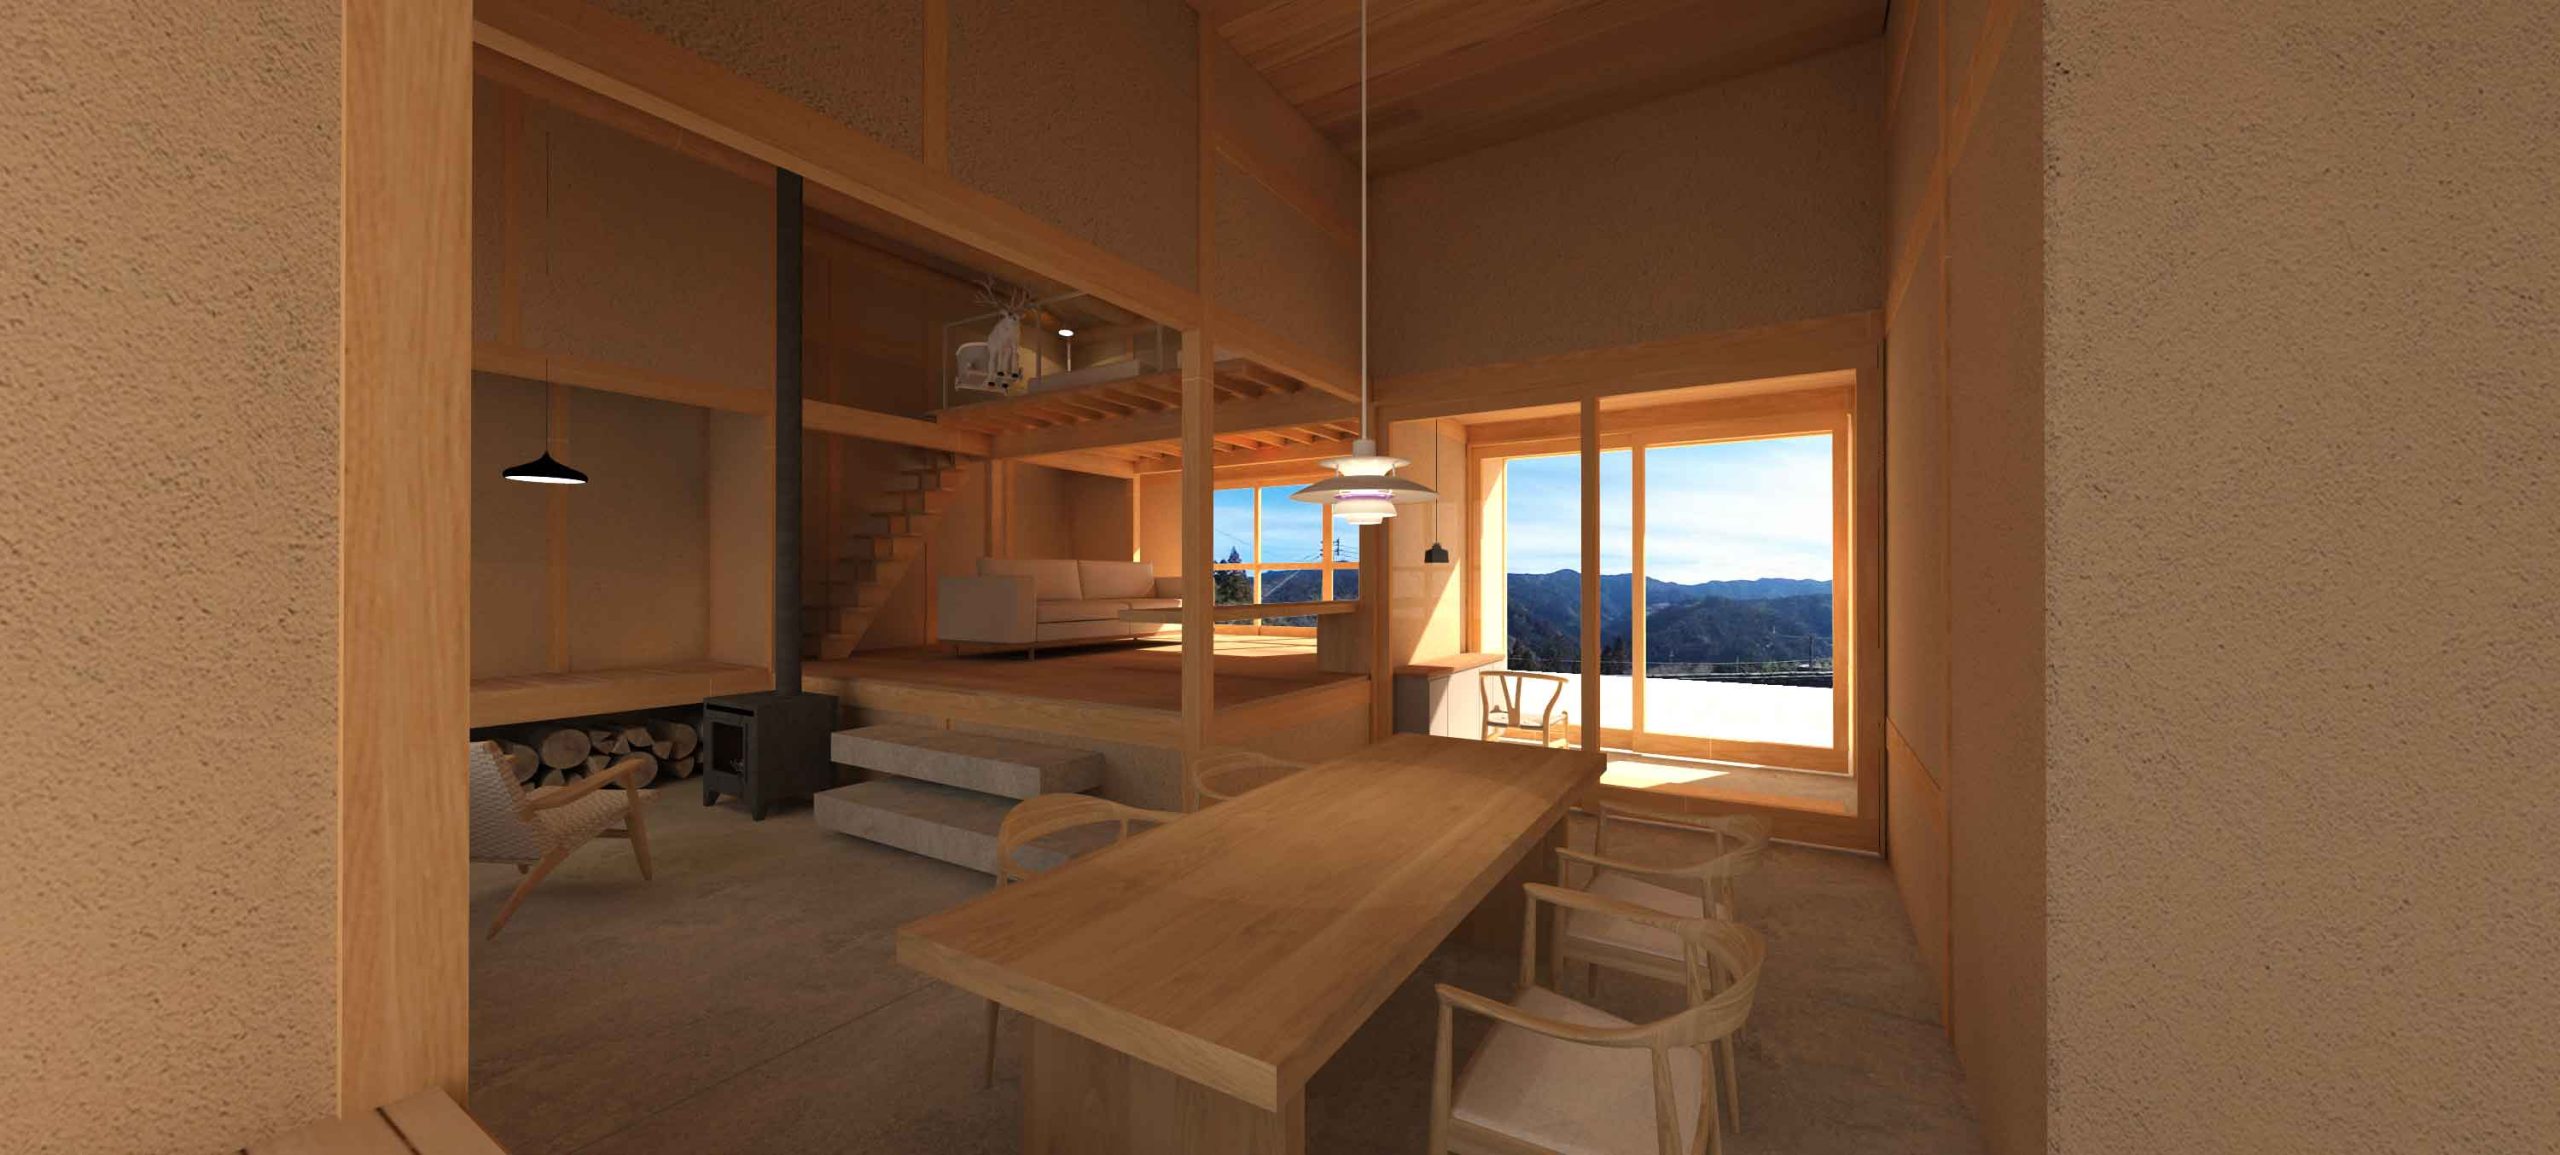 香美の家|atelier thu | 兵庫、神戸の建築設計事務所